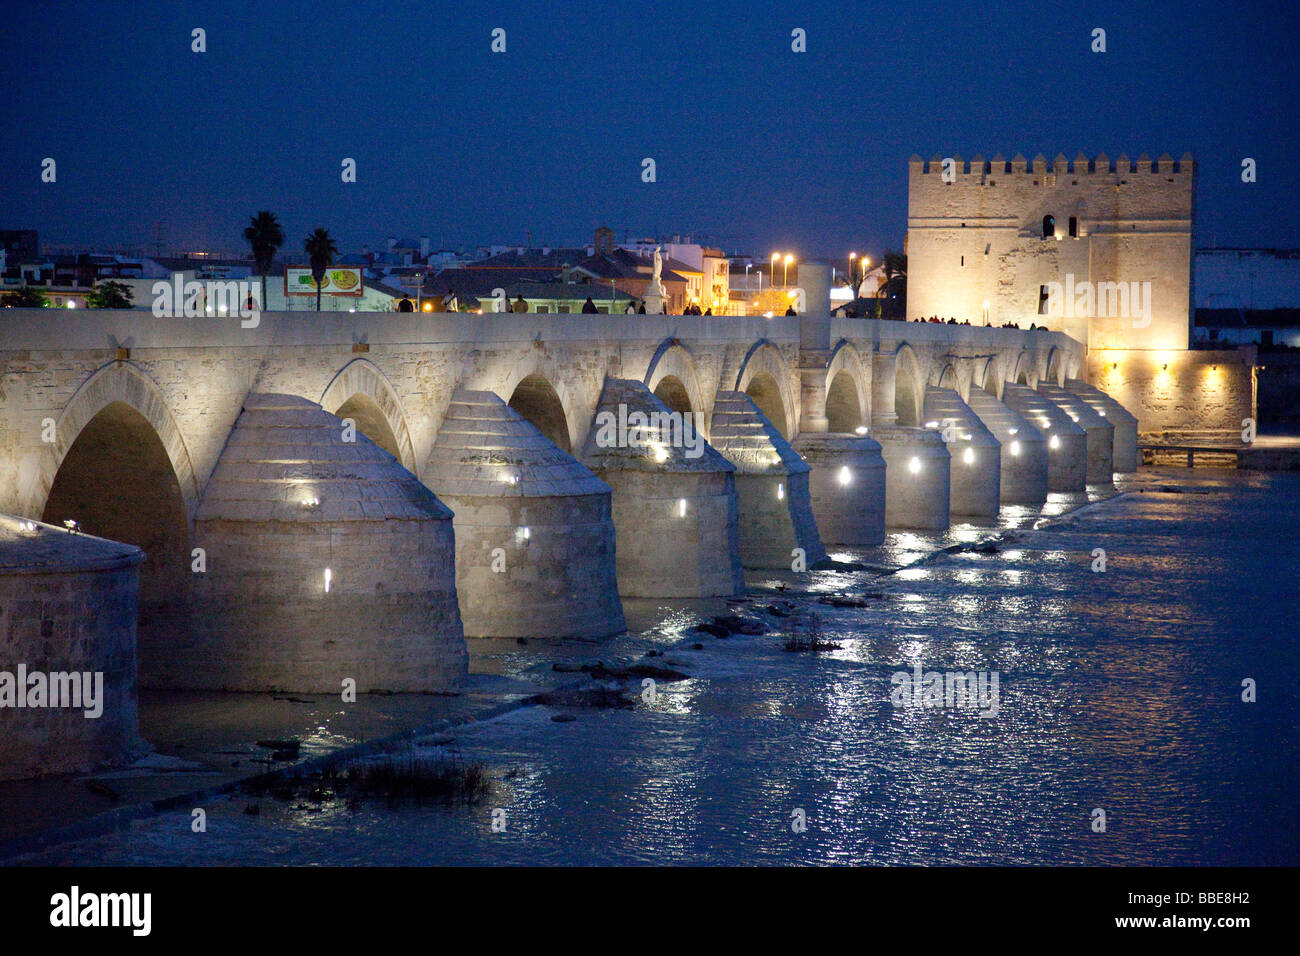 Calahorra Tower and Puente Romano or Roman Bridge over the Guadalquivir River in Cordoba Spain Stock Photo